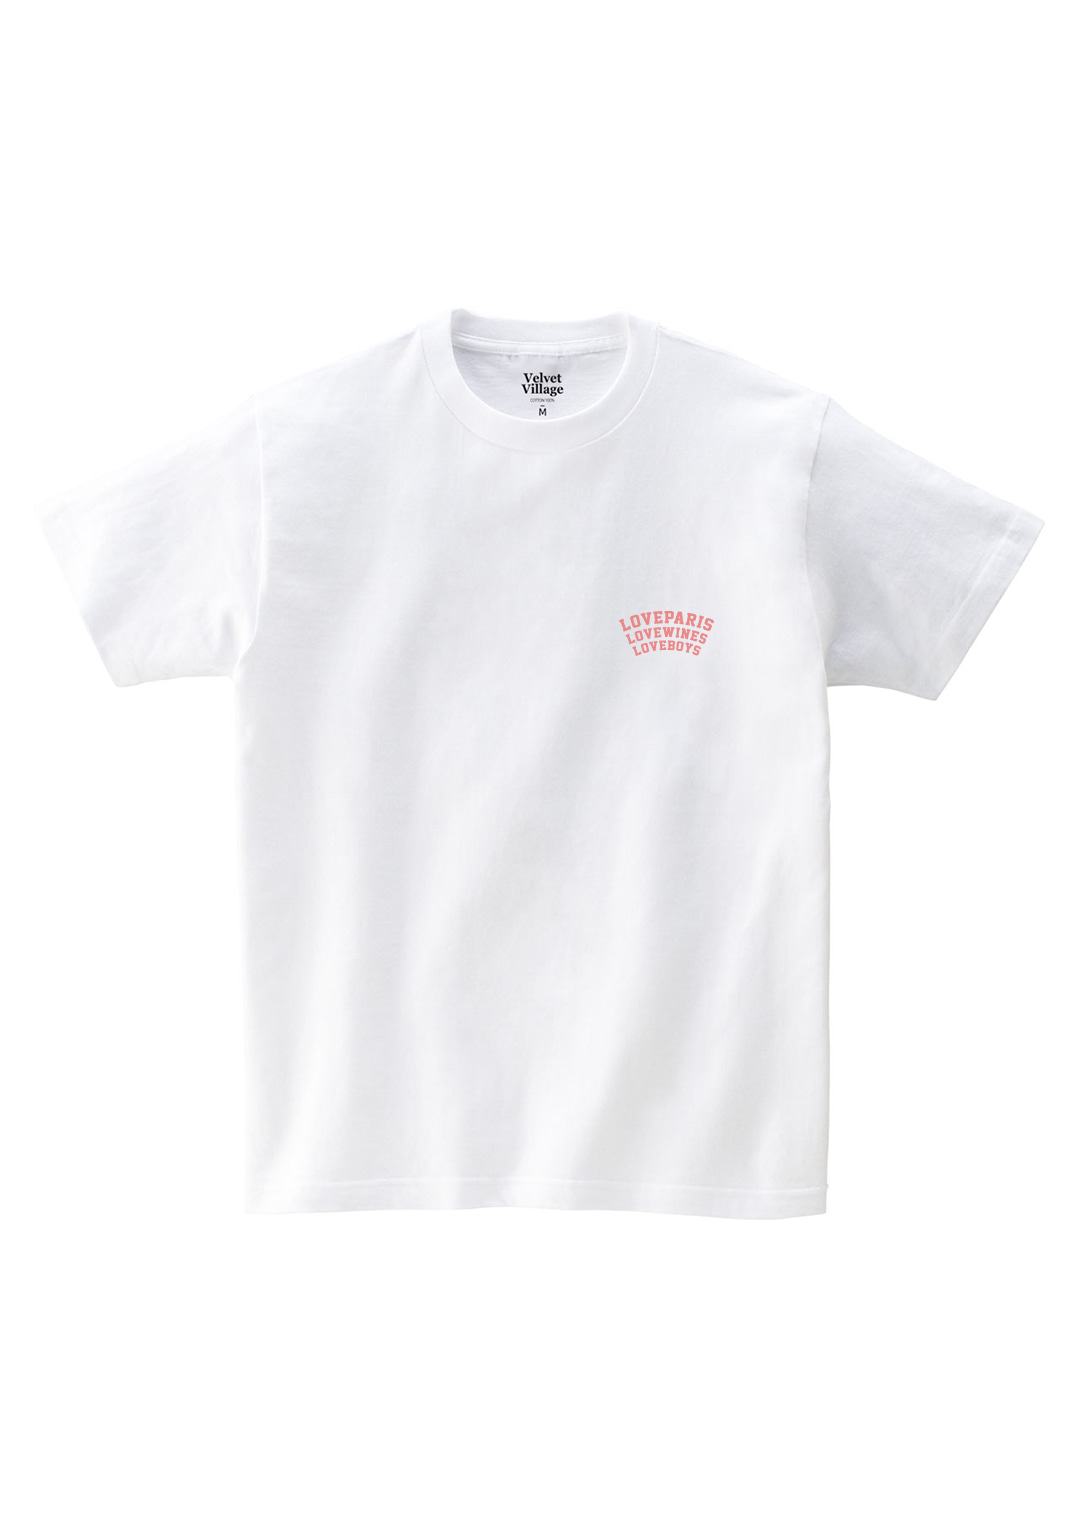 Loveparis T-shirt (White)